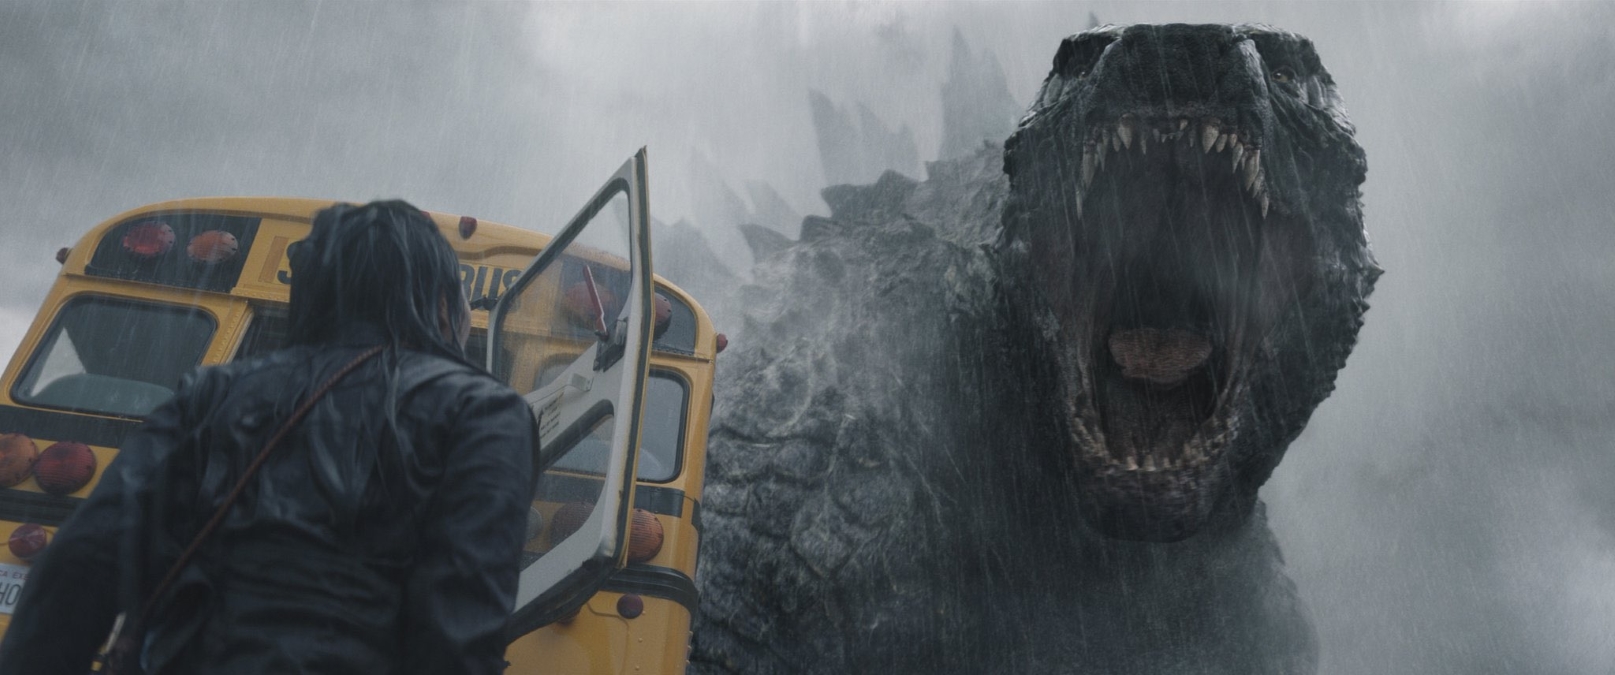 Godzilla em Monarch: Legacy of Monsters (Divulgação / Apple TV+)